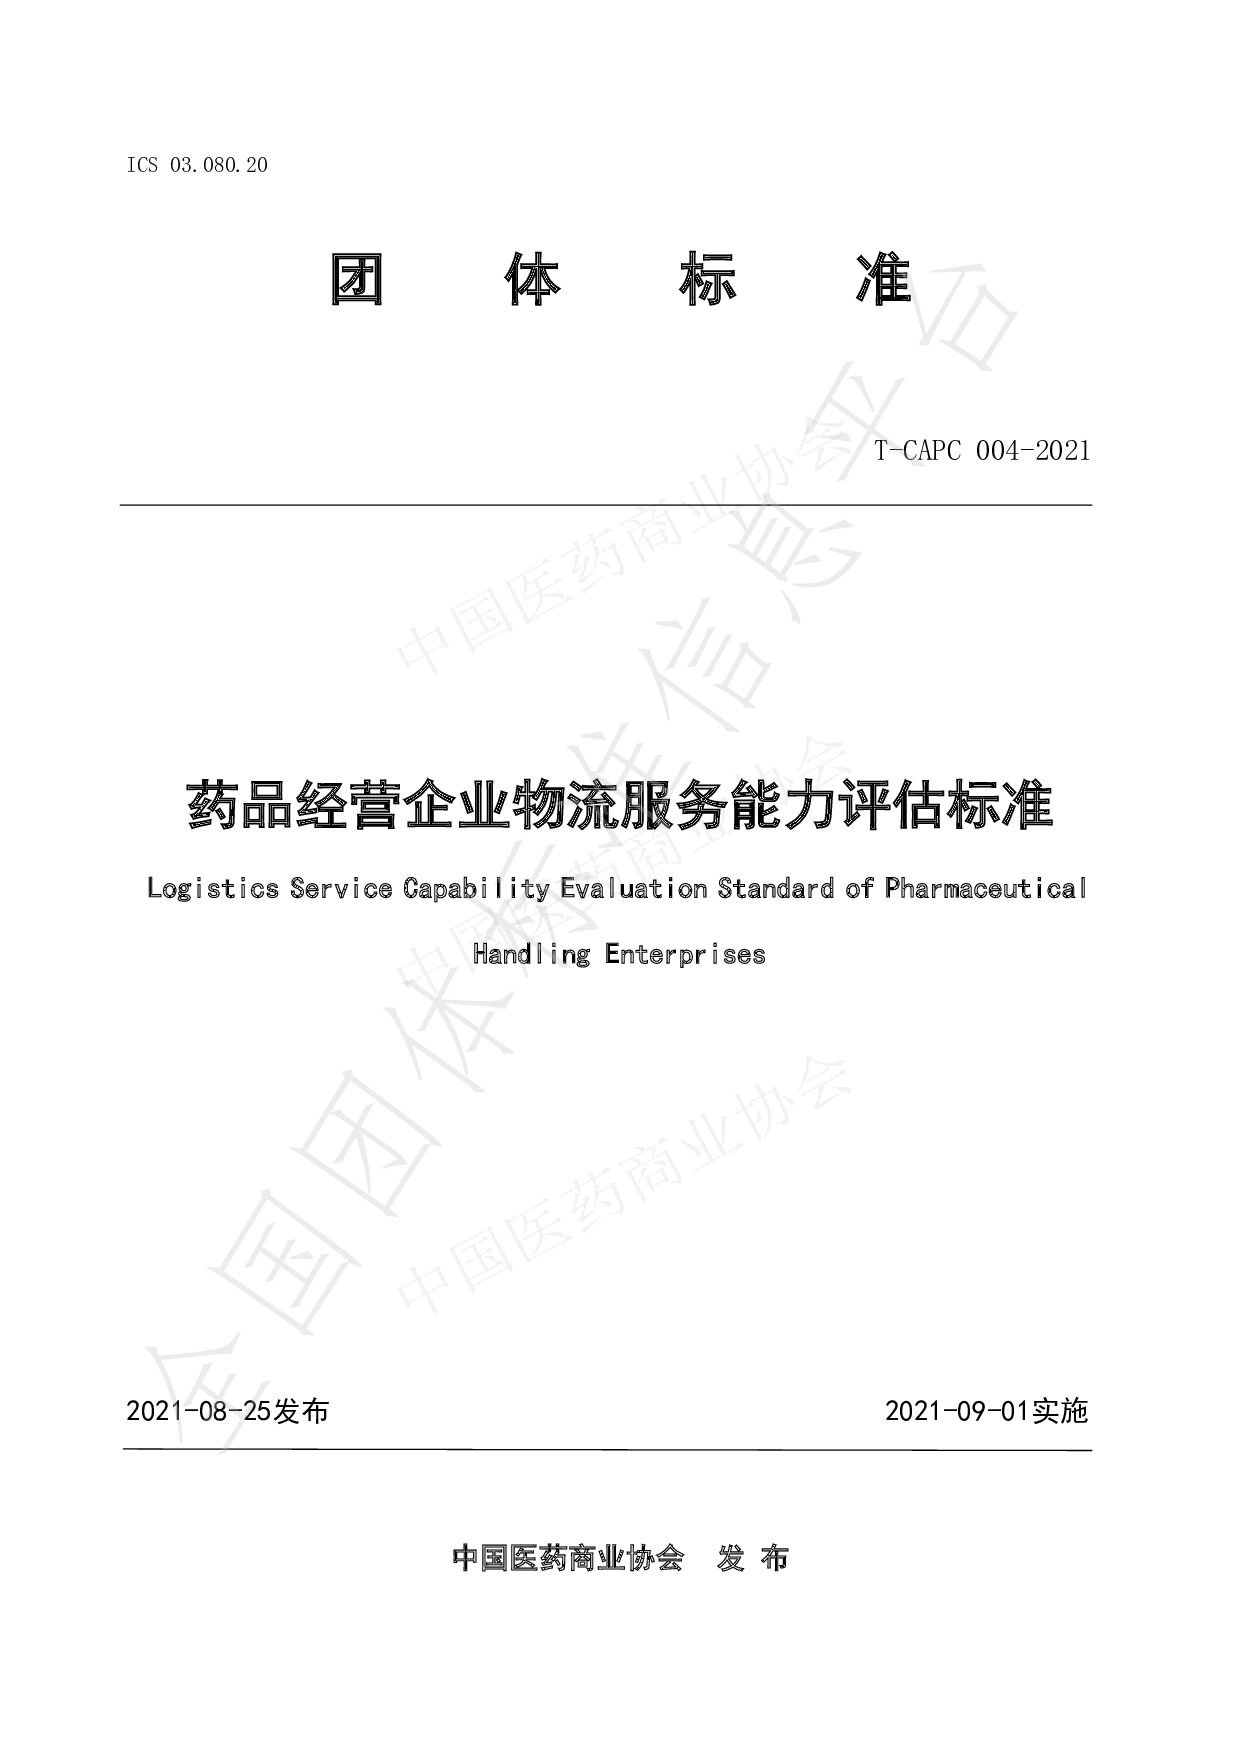 T/CAPC 004—2021